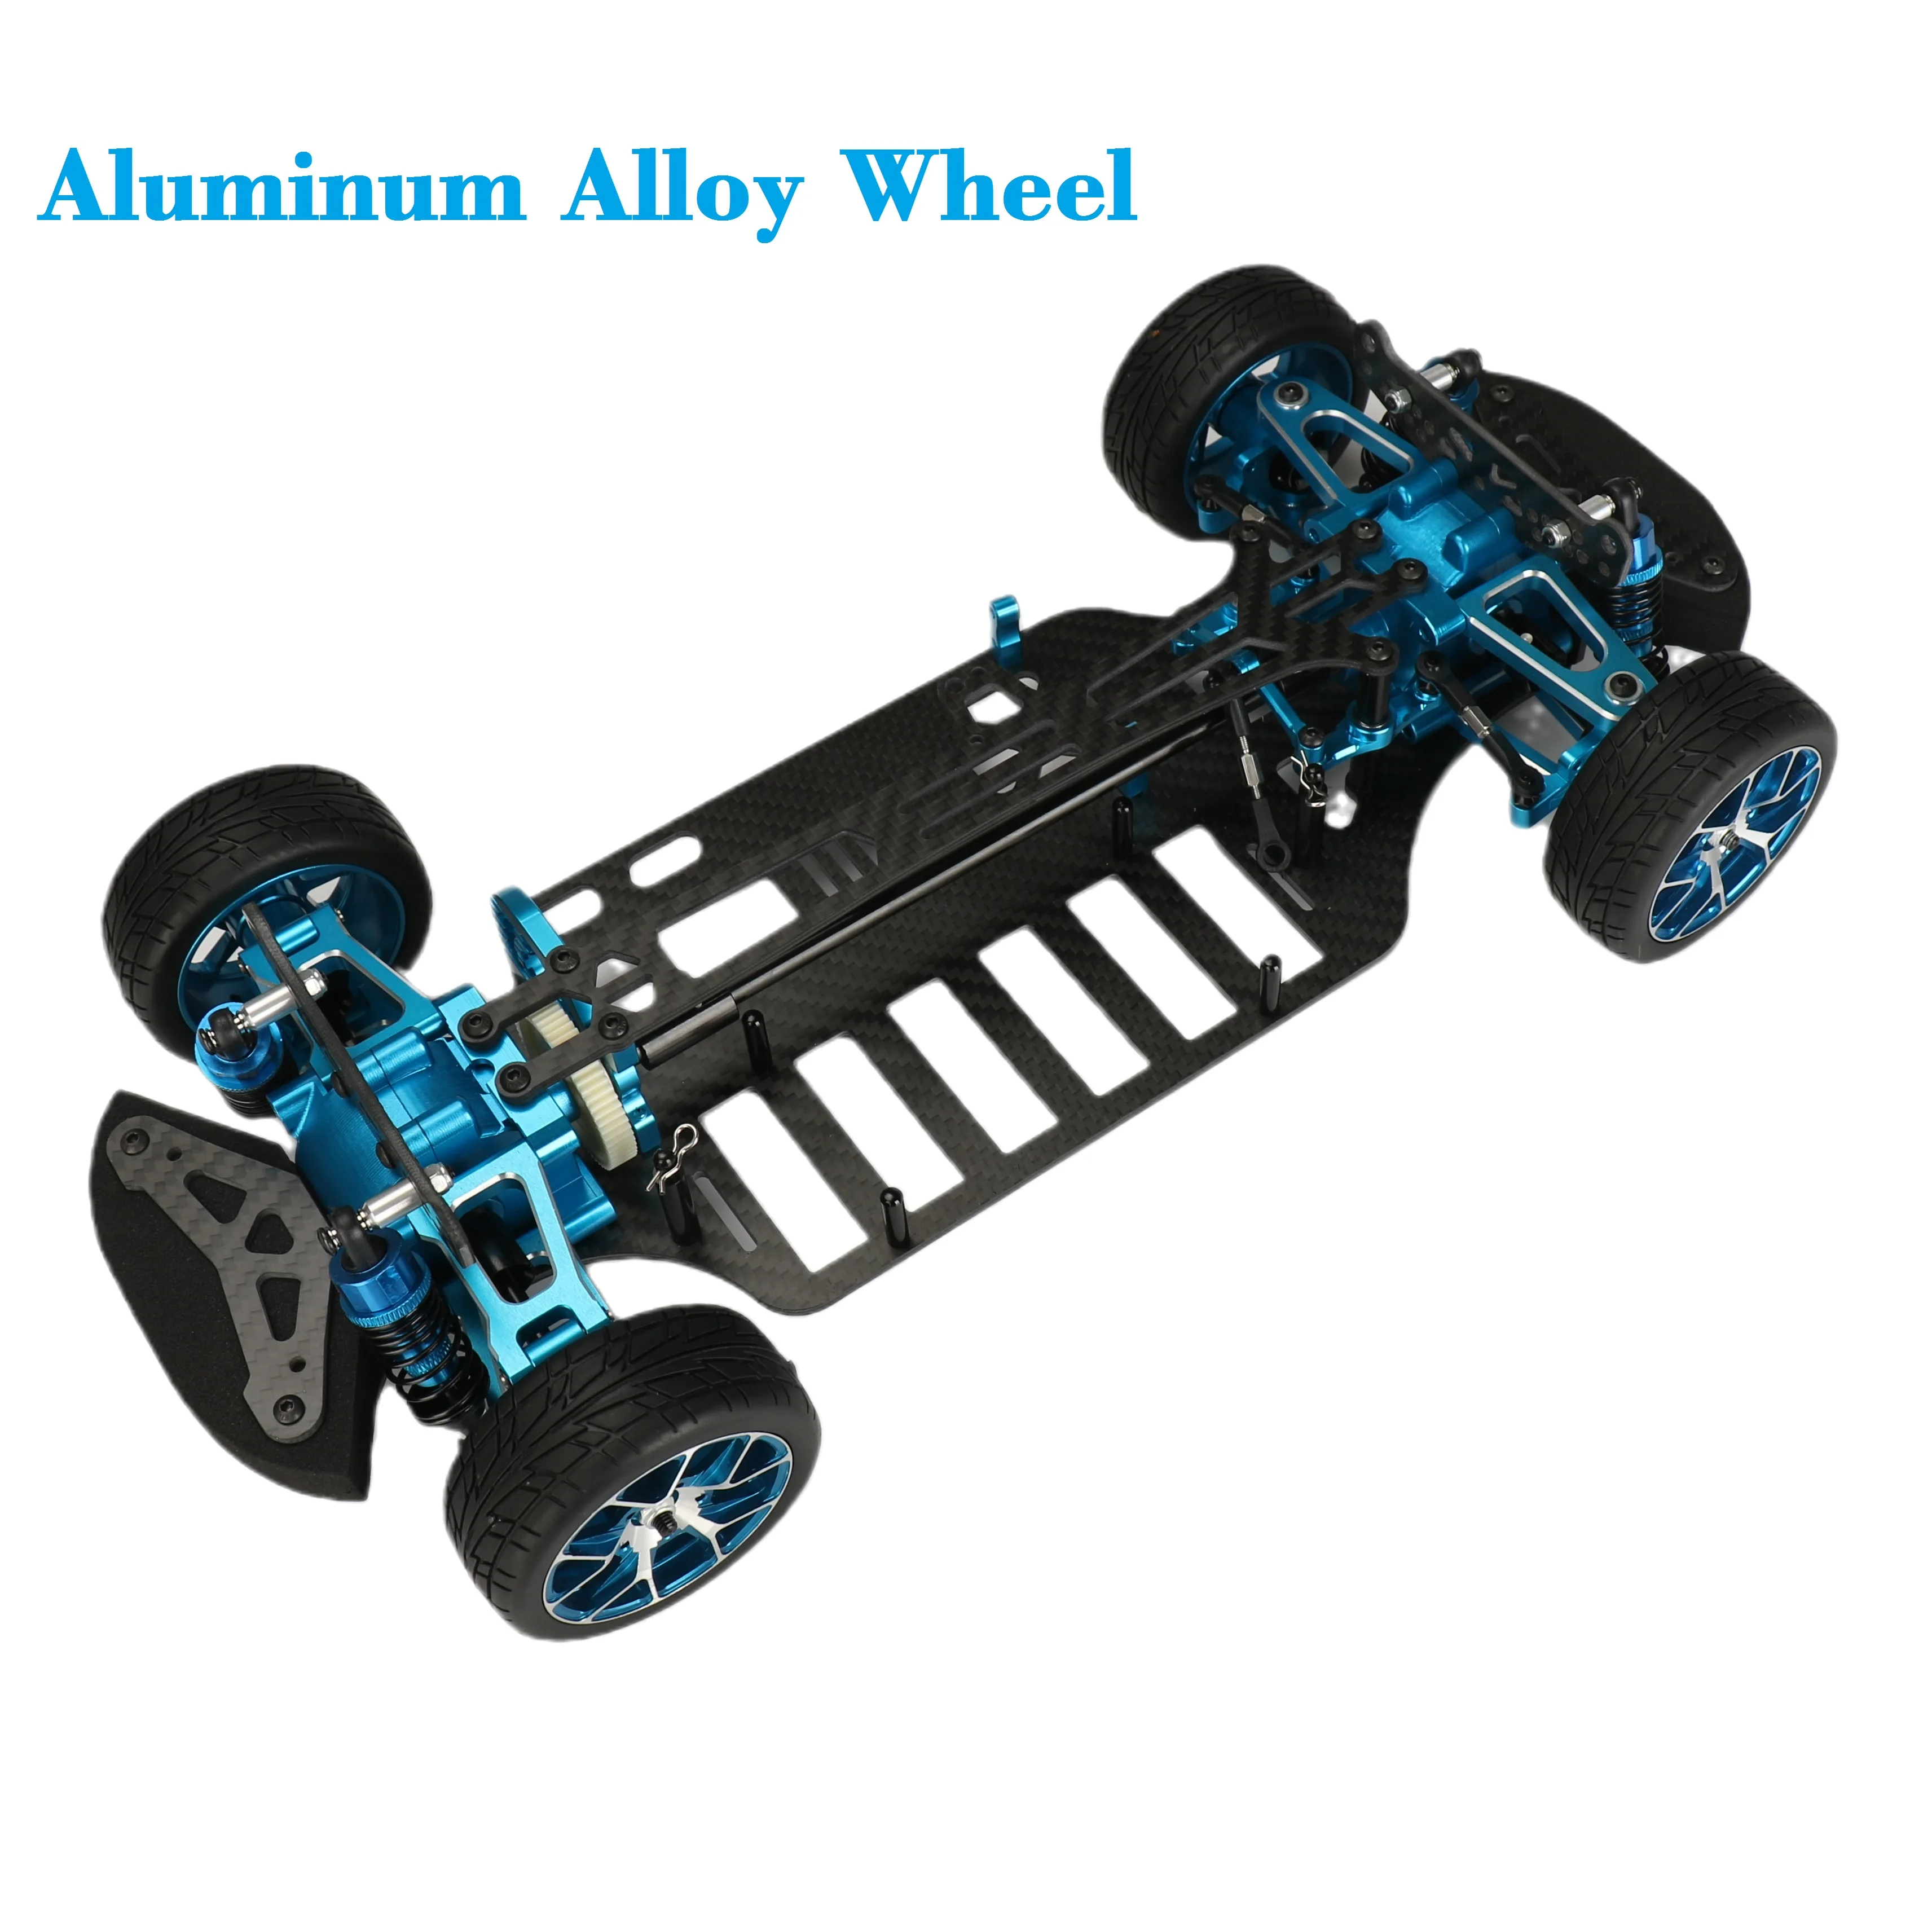 1/10 RC Car Aluminium Alloy & Carbon Touring Car Frame Kit for Tamiya TT-01 TT-01E Chassis Upgrades Parts rc car price